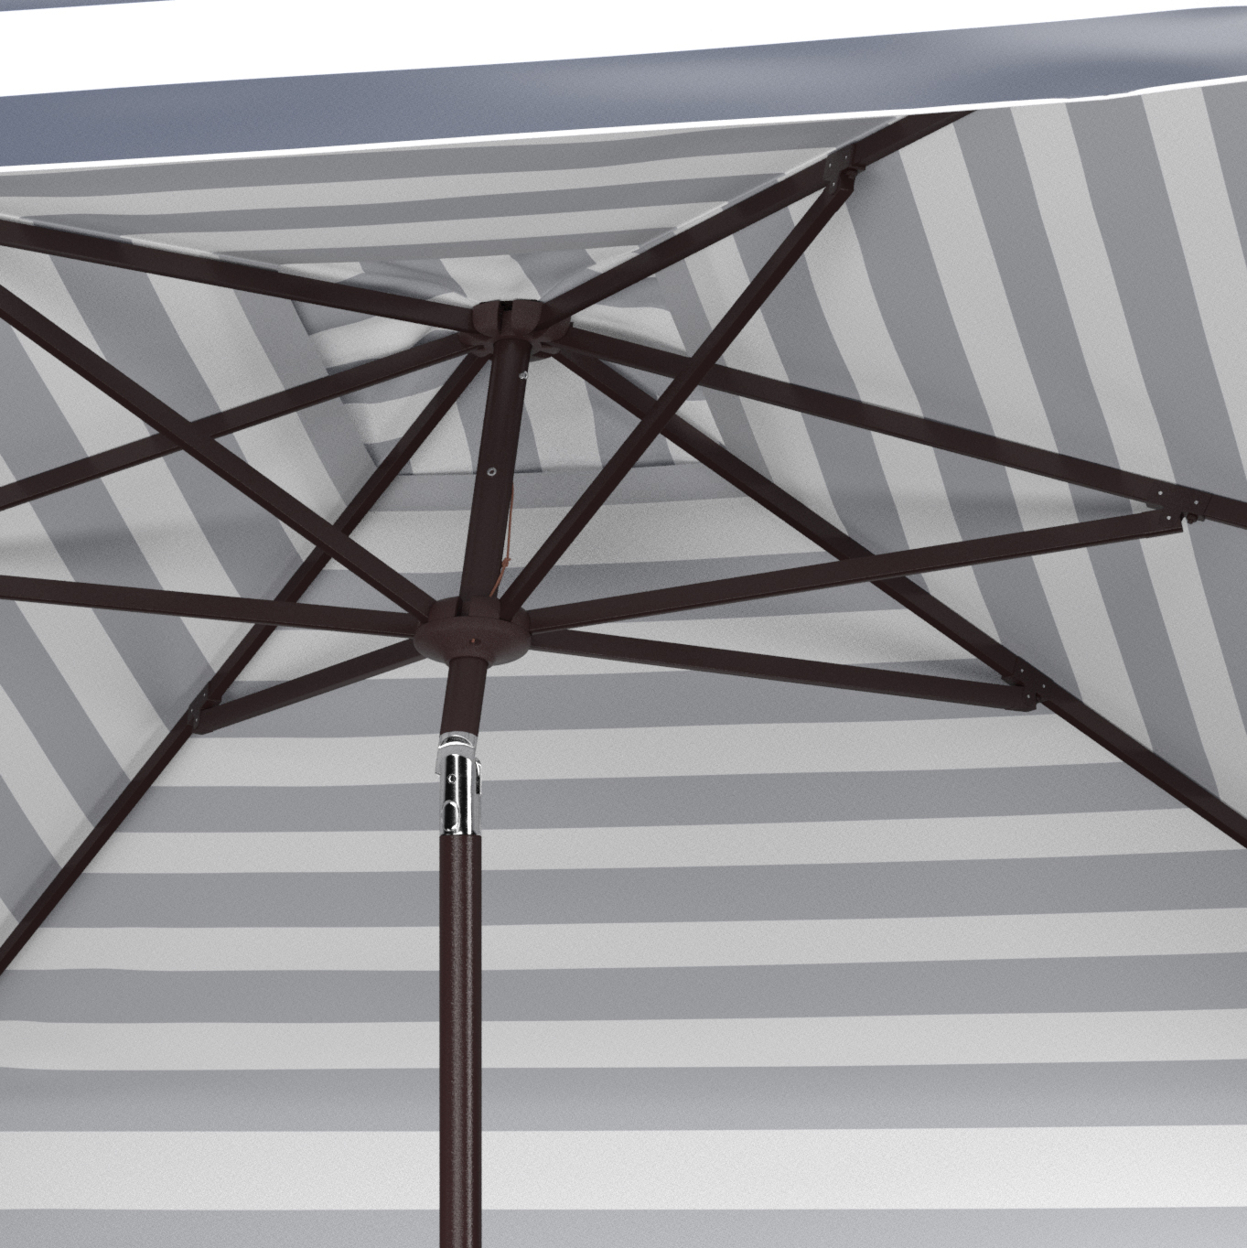 SAFAVIEH Outdoor Collection Elsa Fashion Line 7.5-Foot Square Umbrella Navy/White